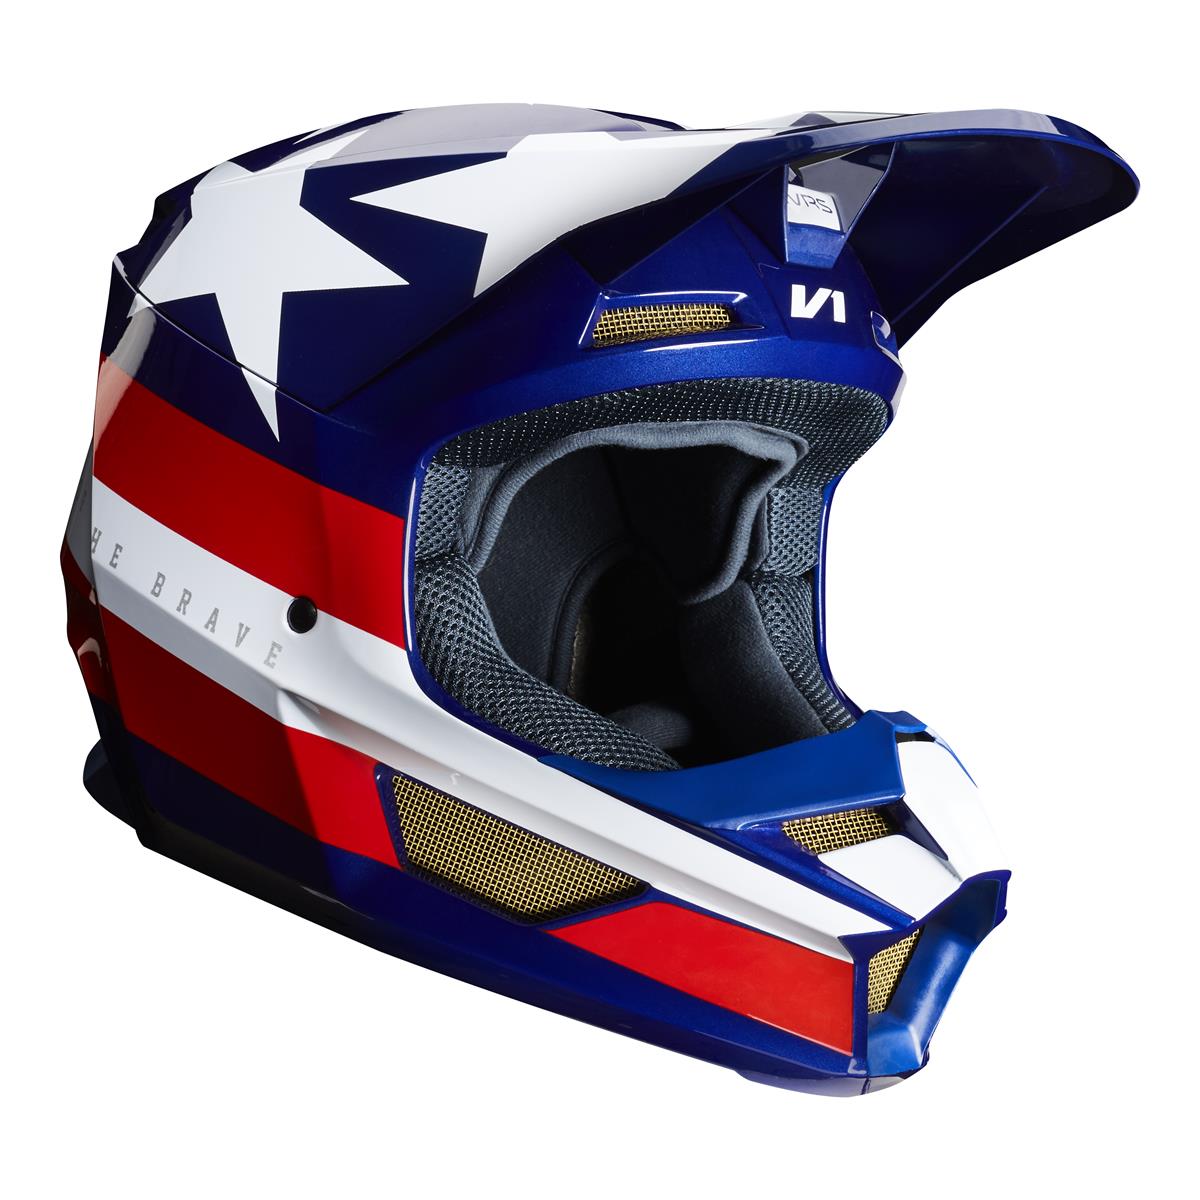 Fox Helmet V1 White/Red/Blue - Special Edition MXON